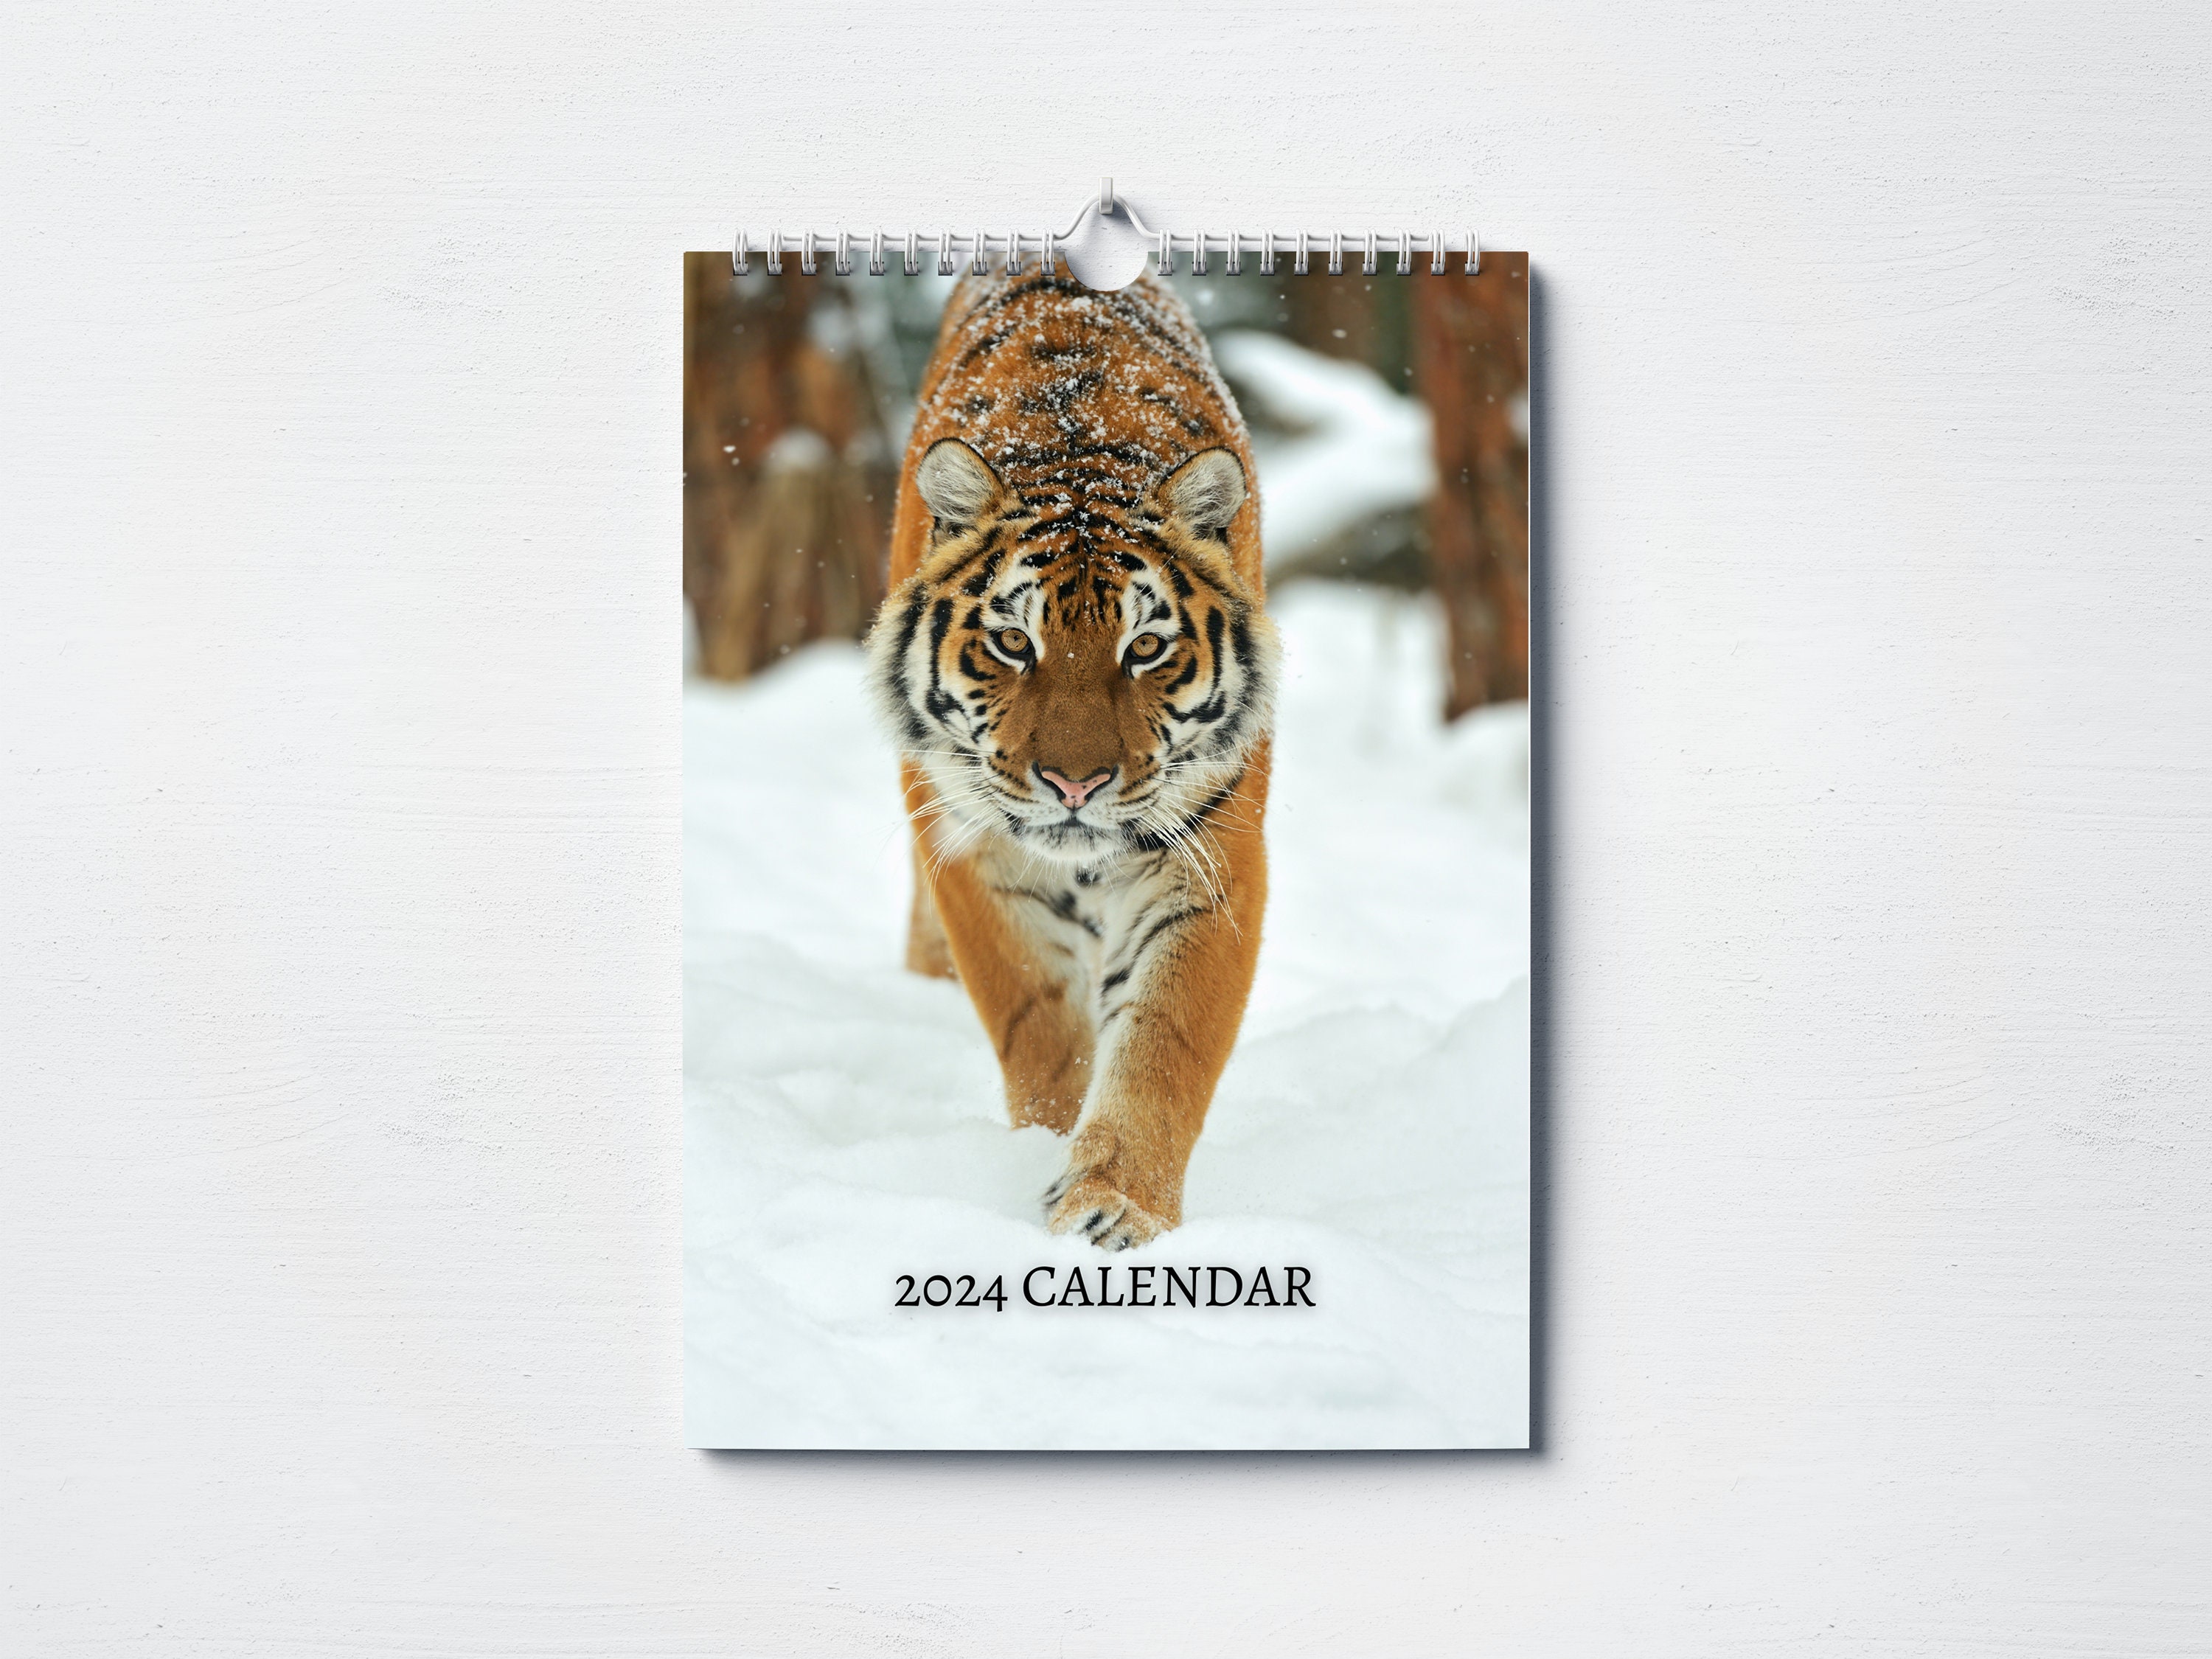 Detroit Tigers 2022 12x12 Team Wall Calendar (Other) 